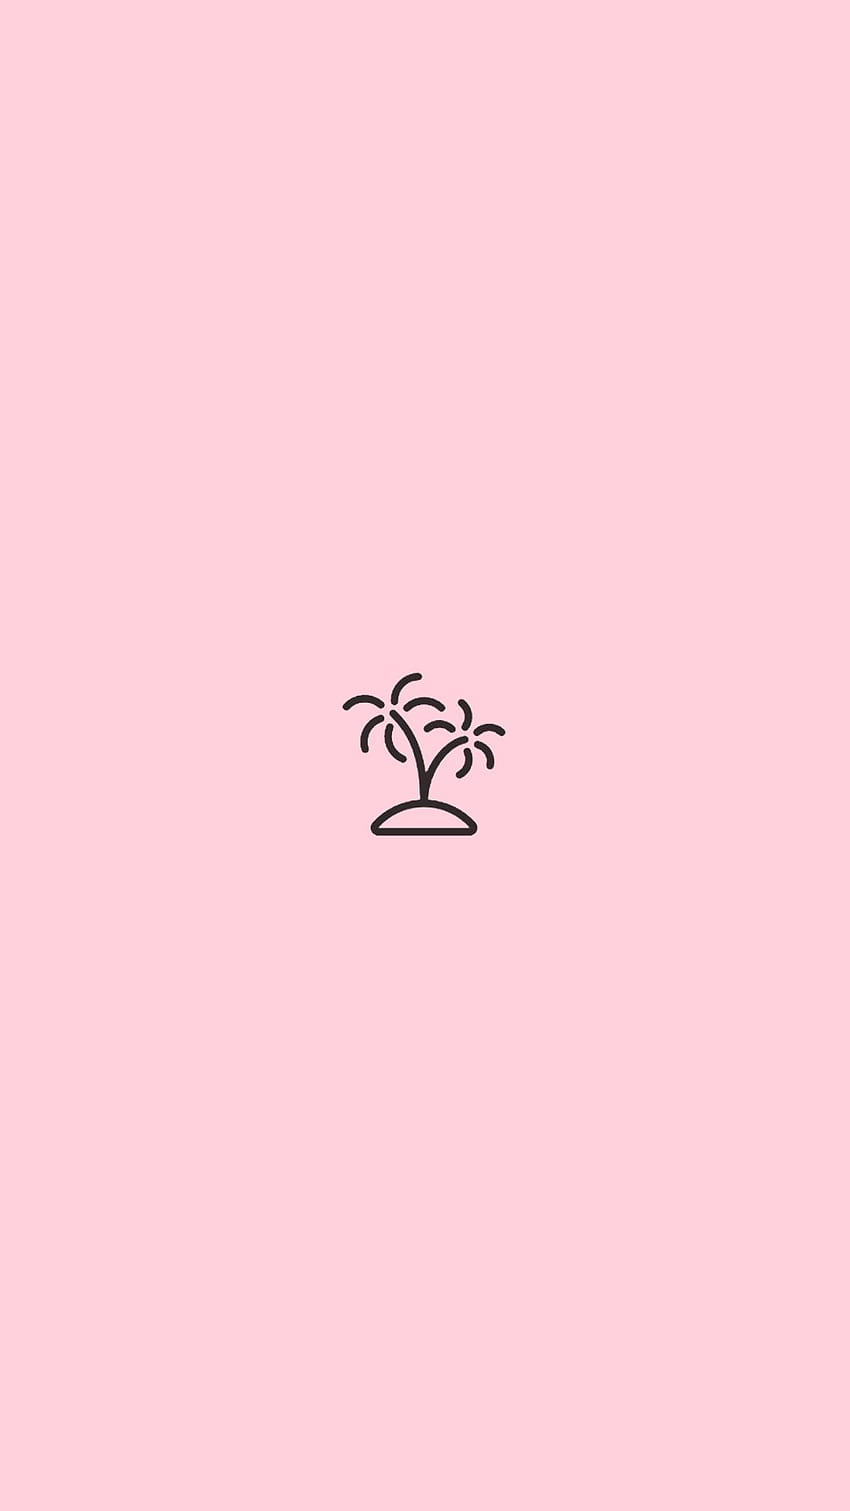 1366x768px, 720P Free download | Summer Break 2019. Pink instagram ...